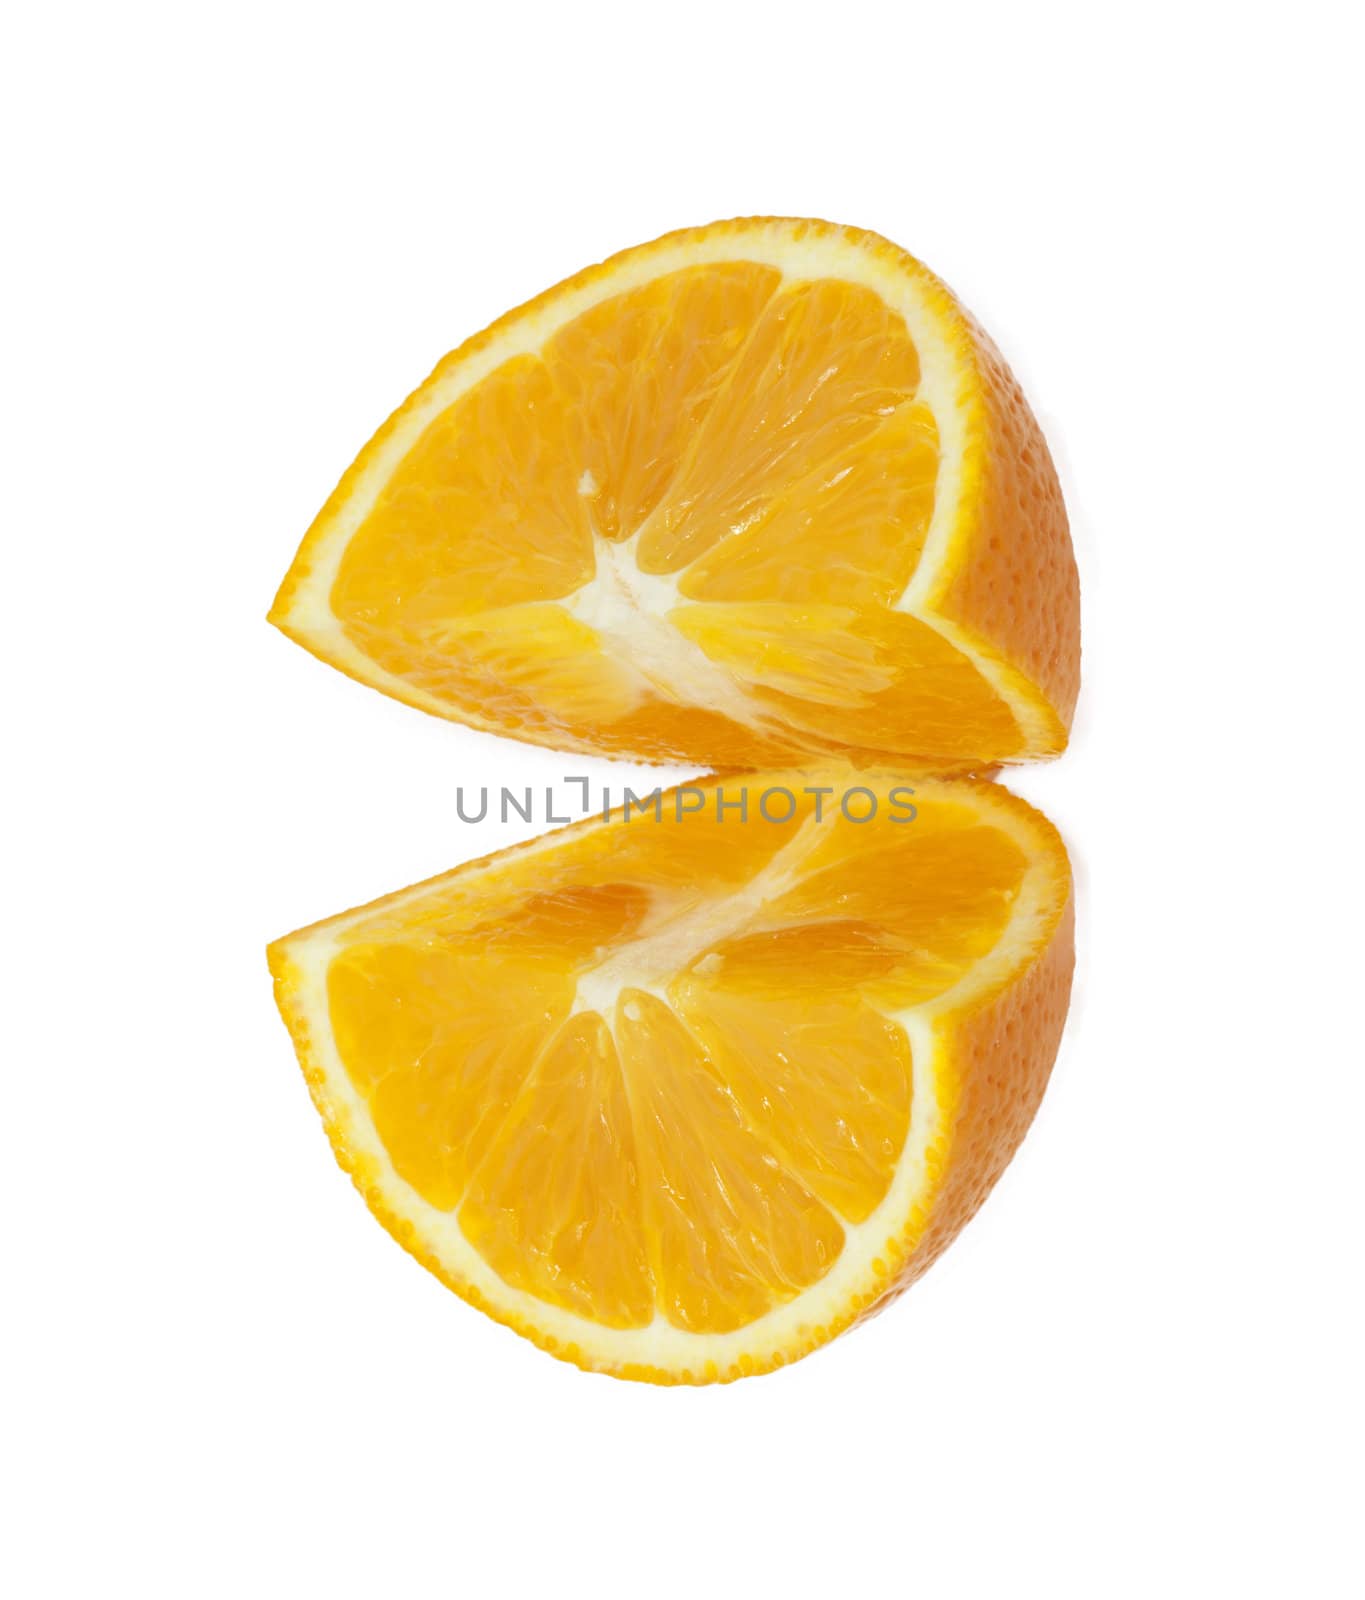 oranges on white background 